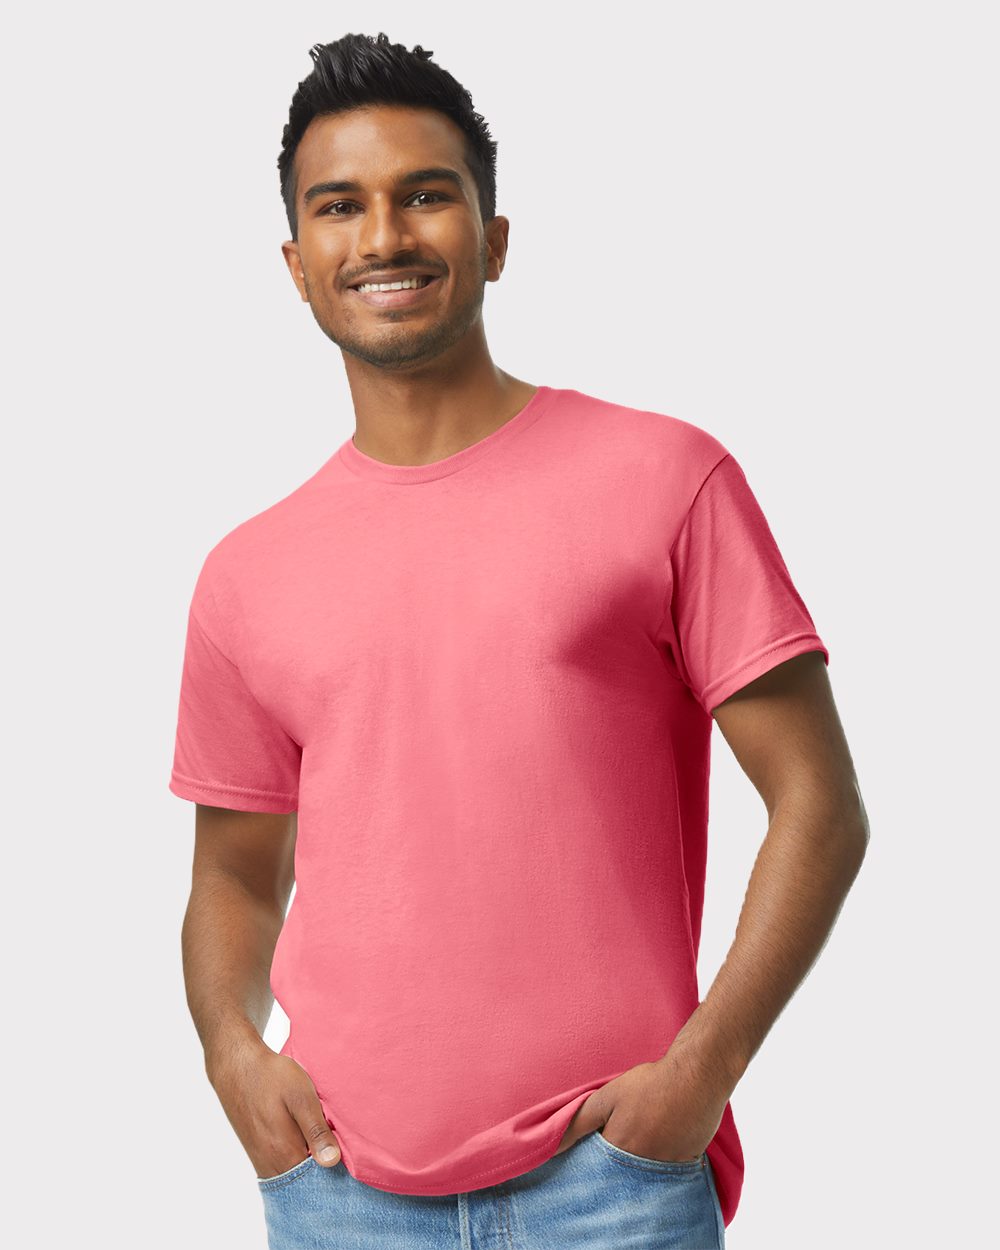 IWPF - Men's T-Shirt Short Sleeve - Tough Guys Wear Pink Cancer - image 3 of 3